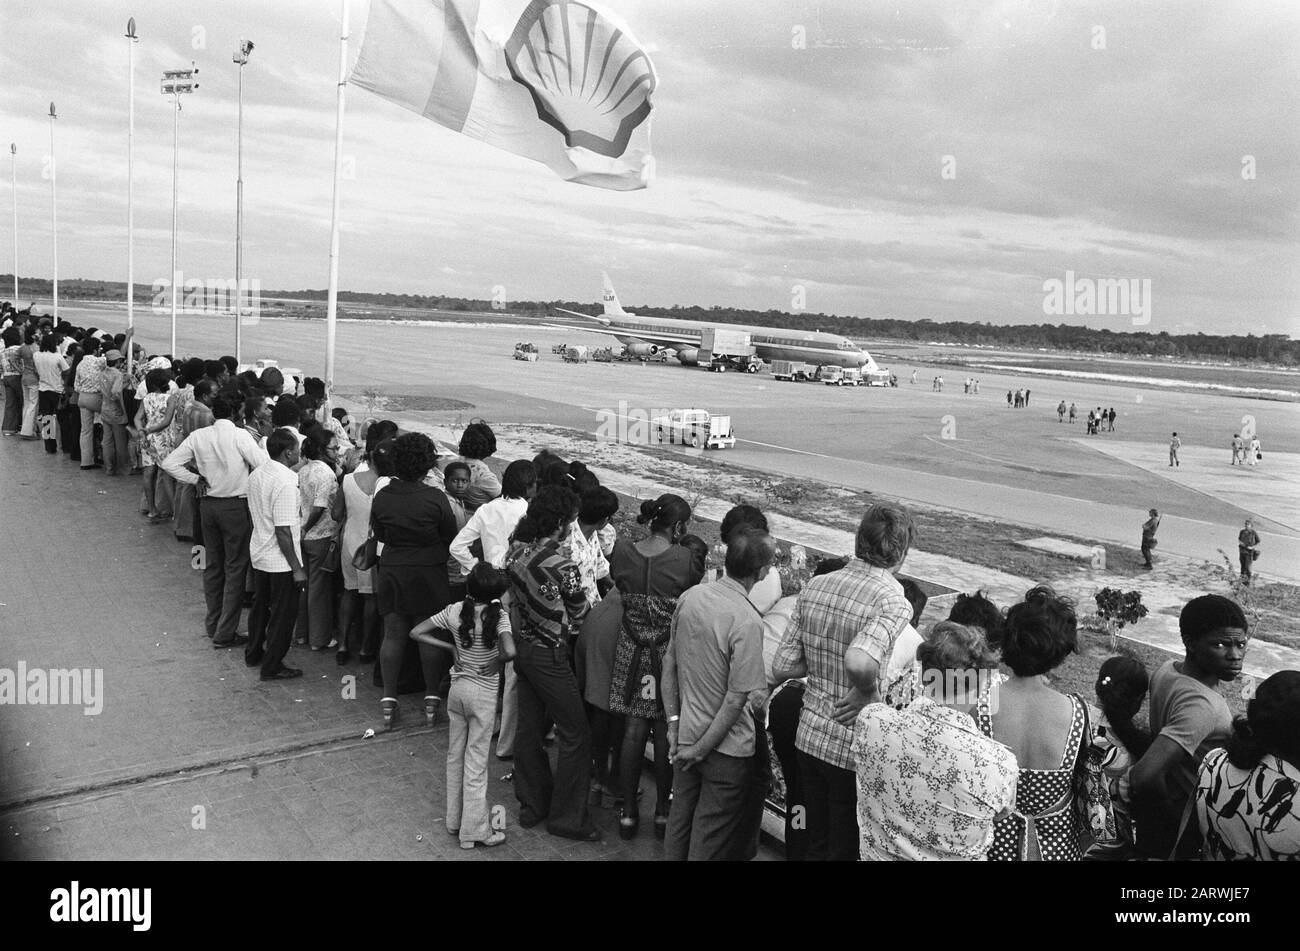 Suriname, airport Zanderij; crowd on pier Date: April 1, 1975 Keywords: airports Stock Photo